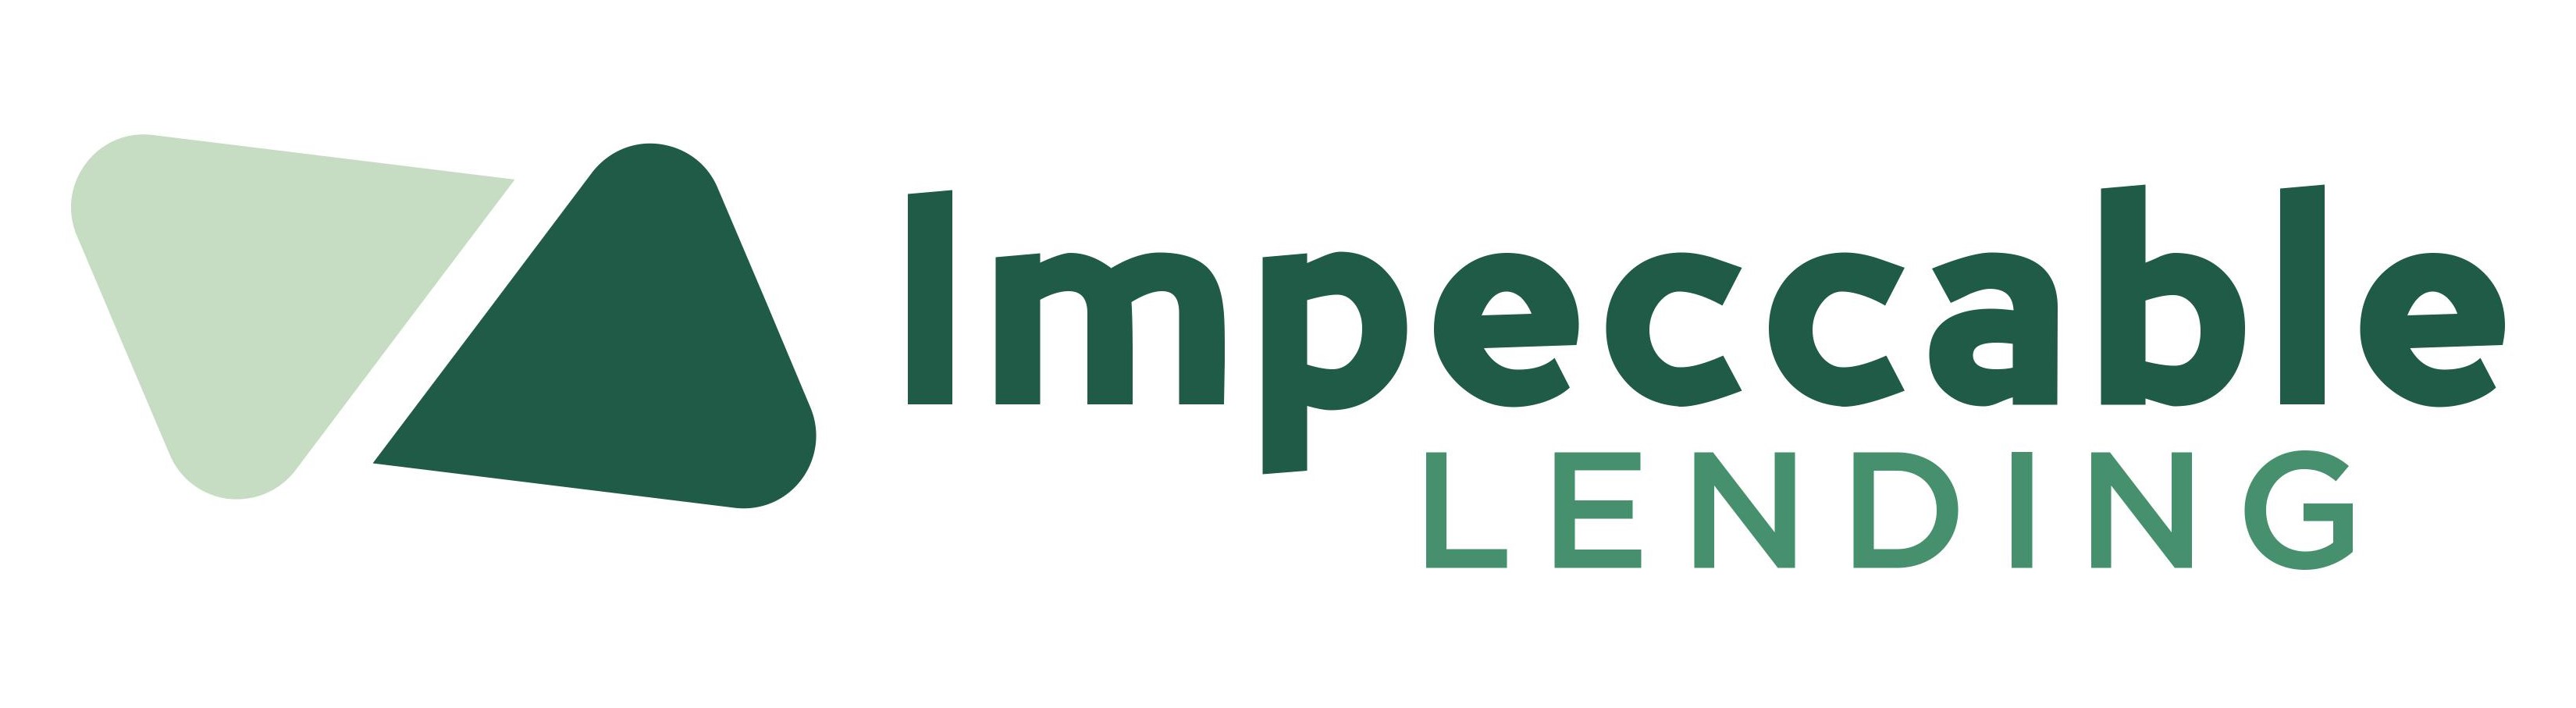 Impeccable lending Logo.jpg